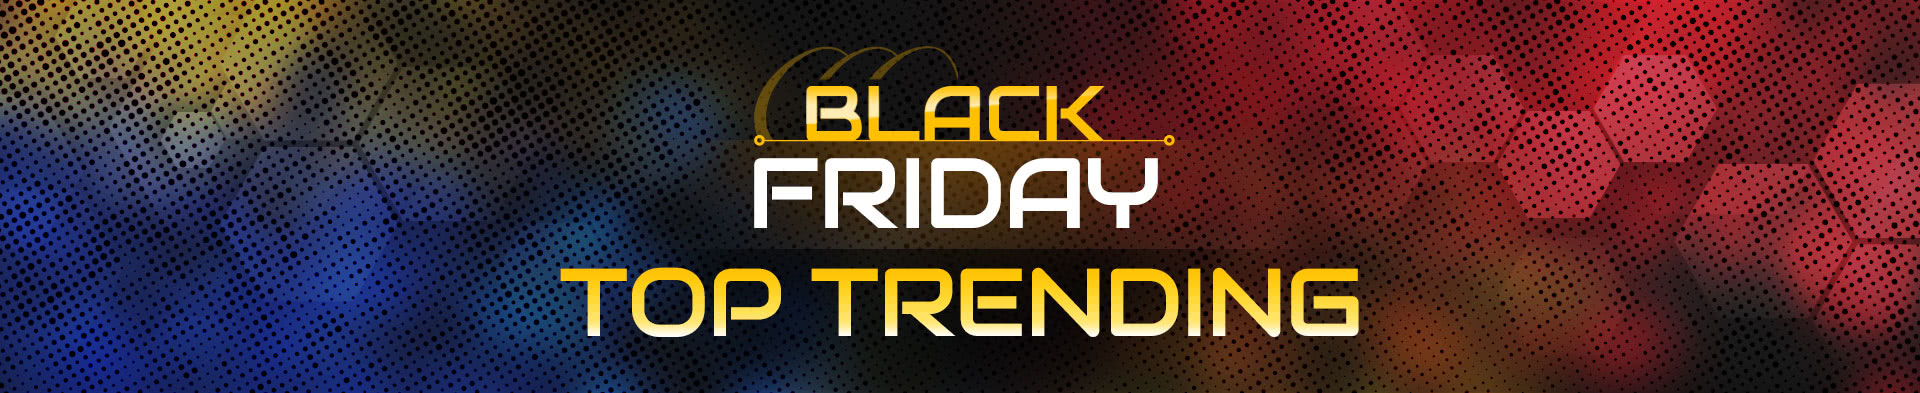 Black Friday Top Trending